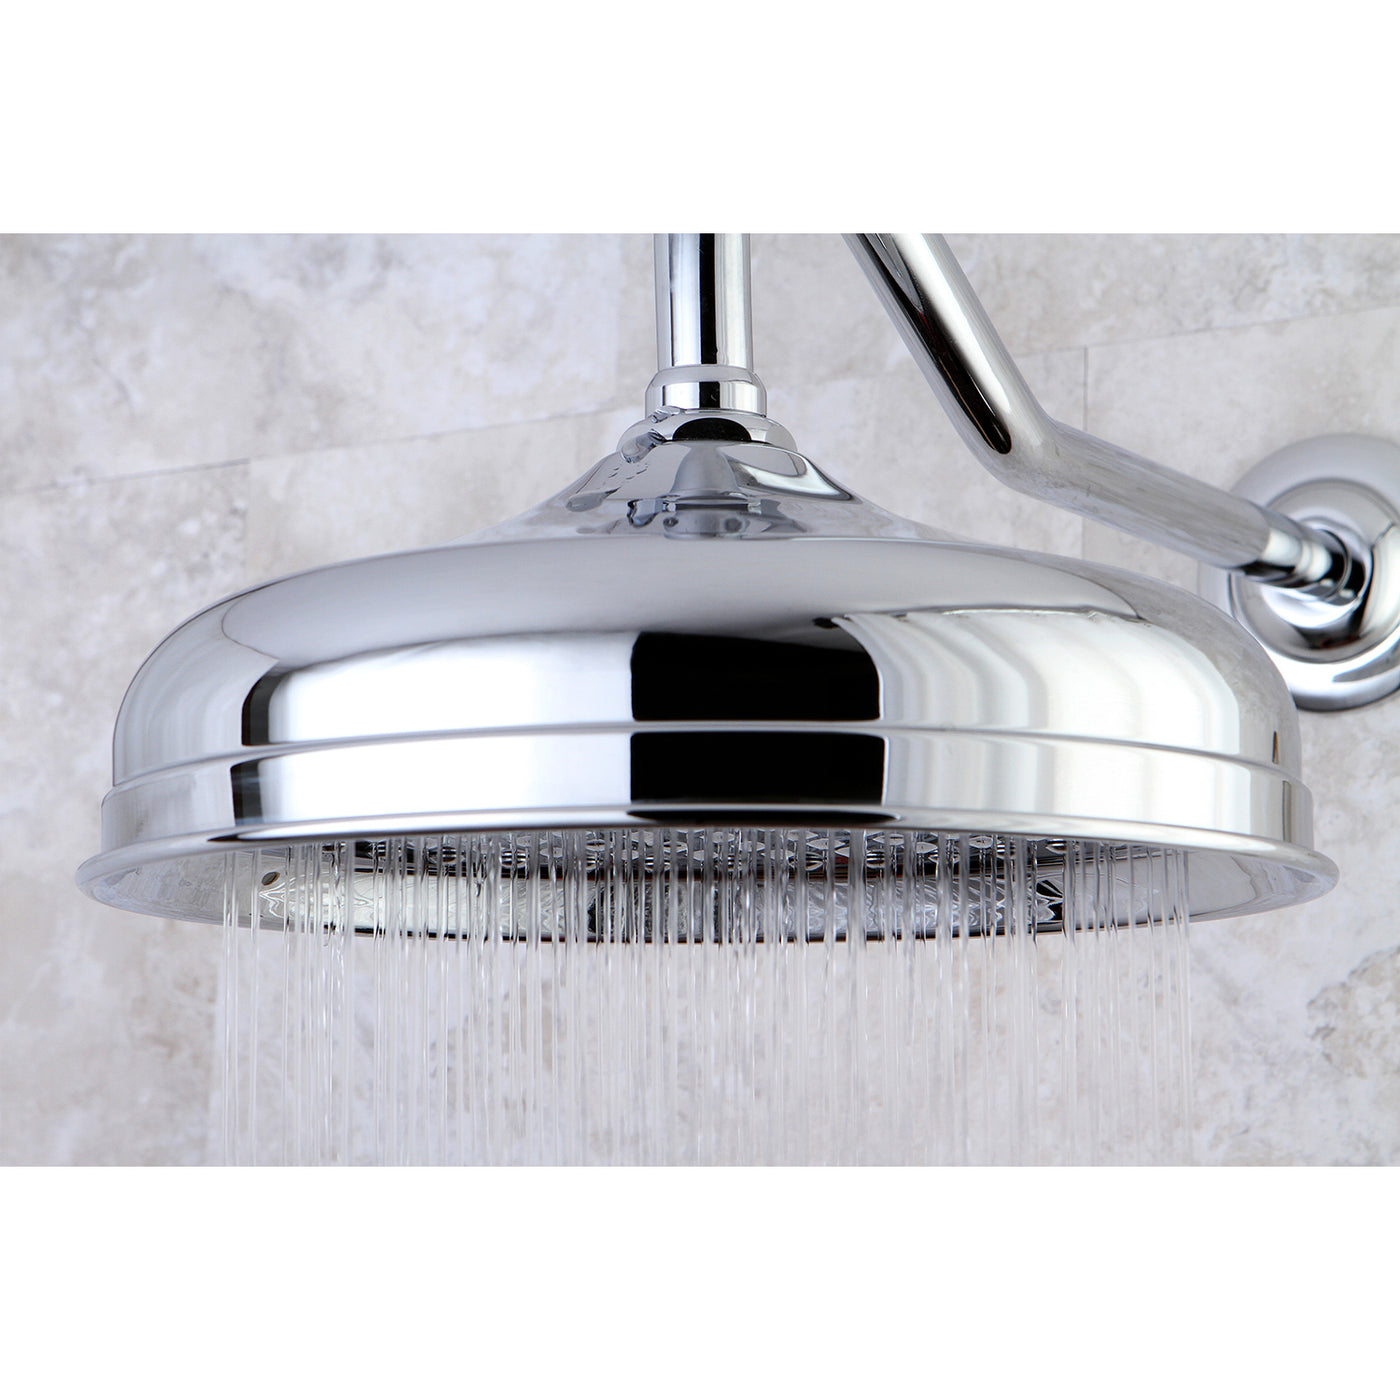 Elements of Design DK1251 10-Inch Raindrop Shower Head, Polished Chrome